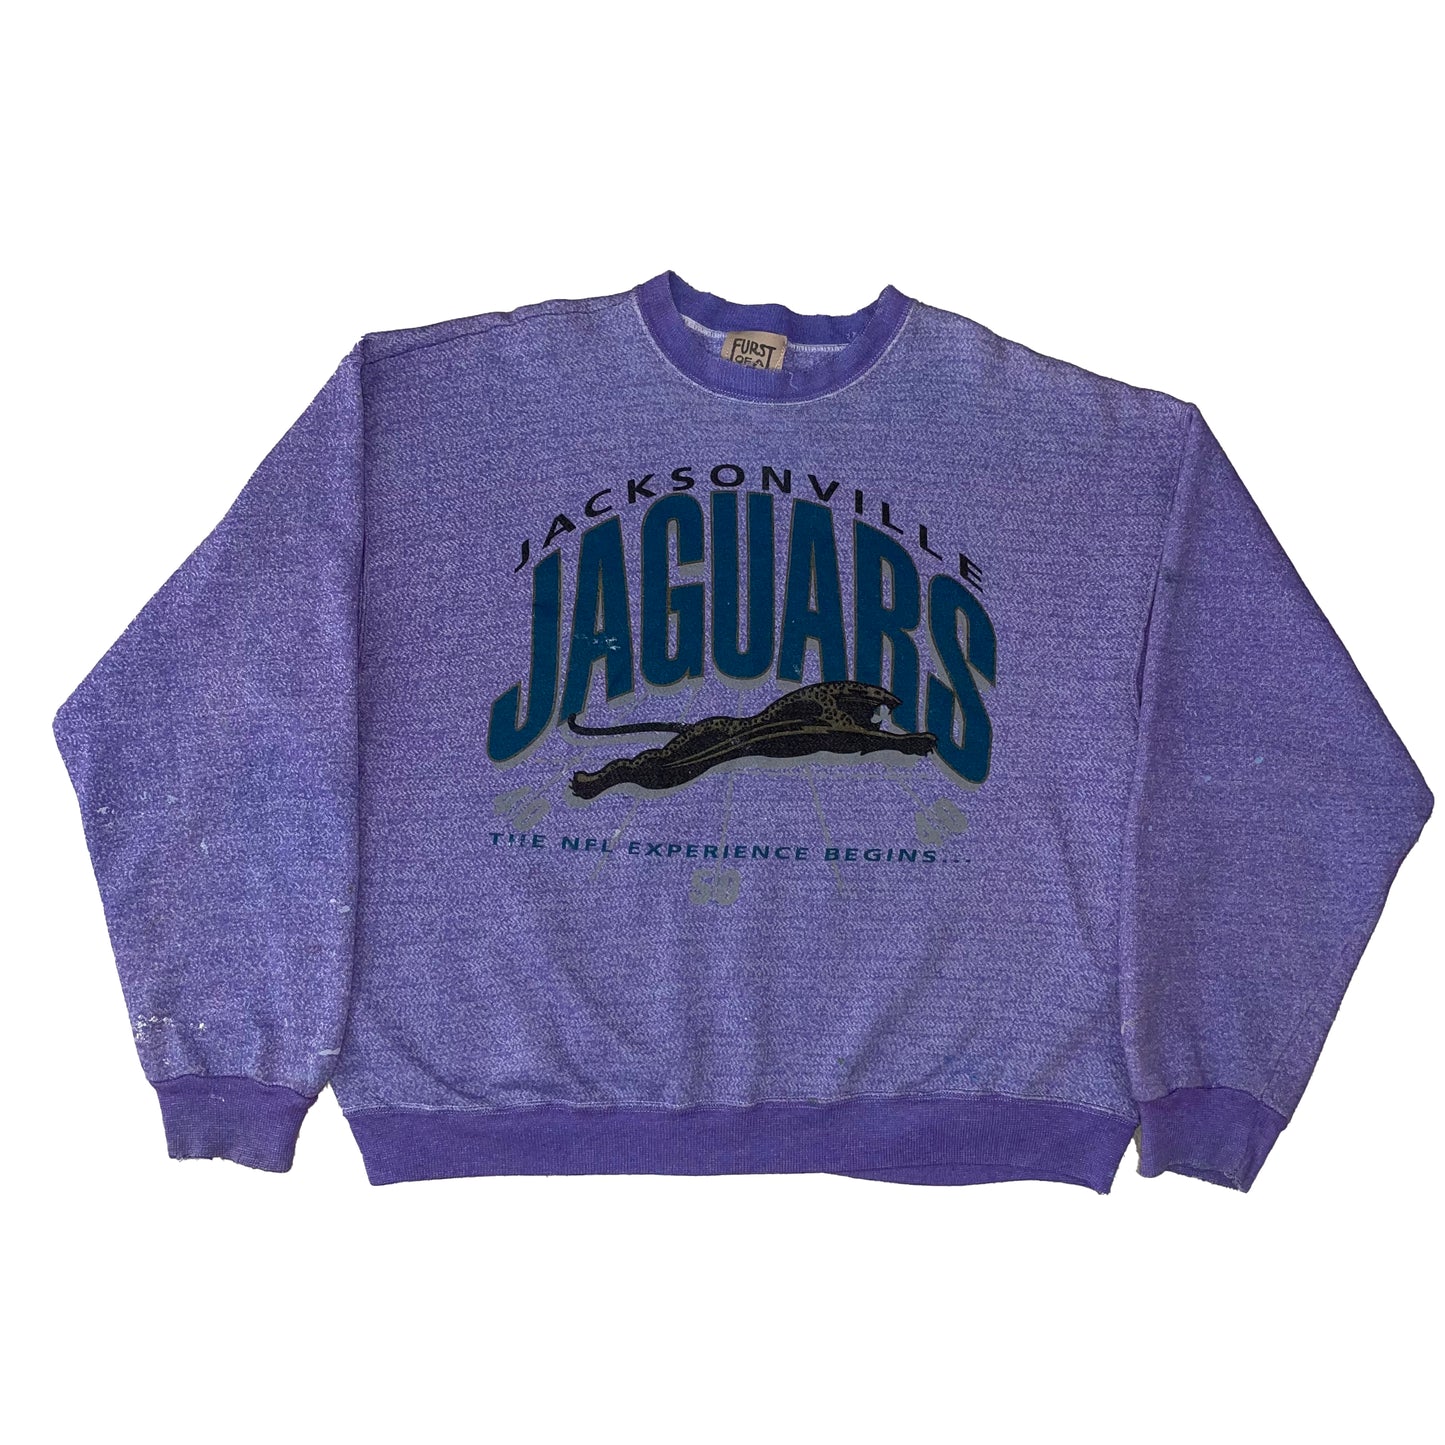 Jacksonville Jaguars purple banned logo sweatshirt size LARGE